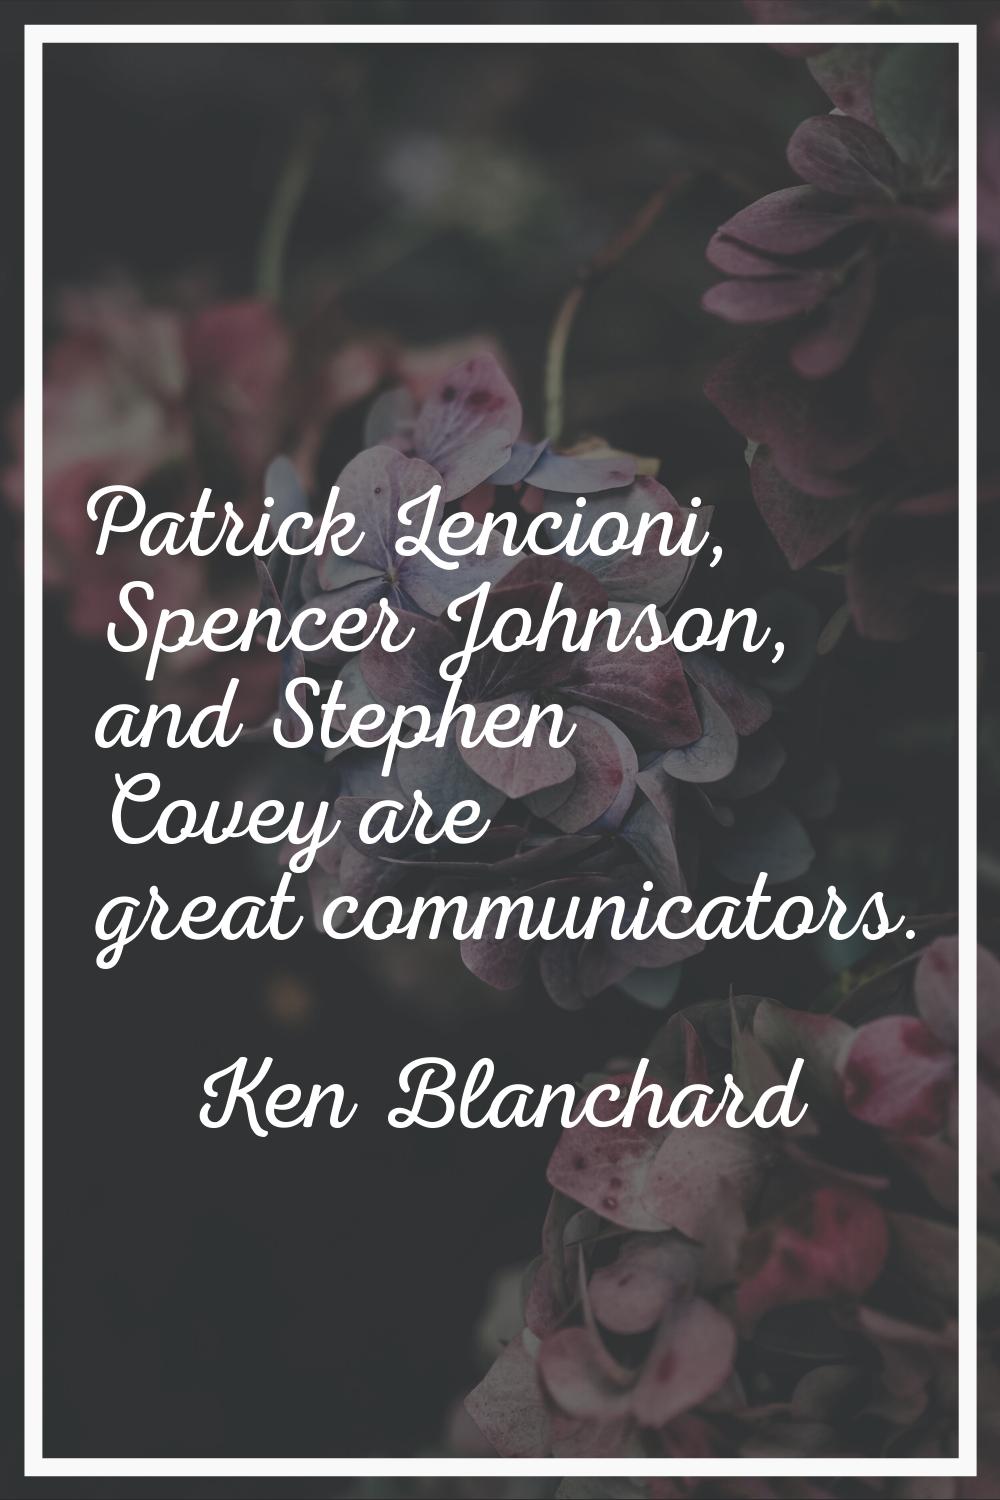 Patrick Lencioni, Spencer Johnson, and Stephen Covey are great communicators.